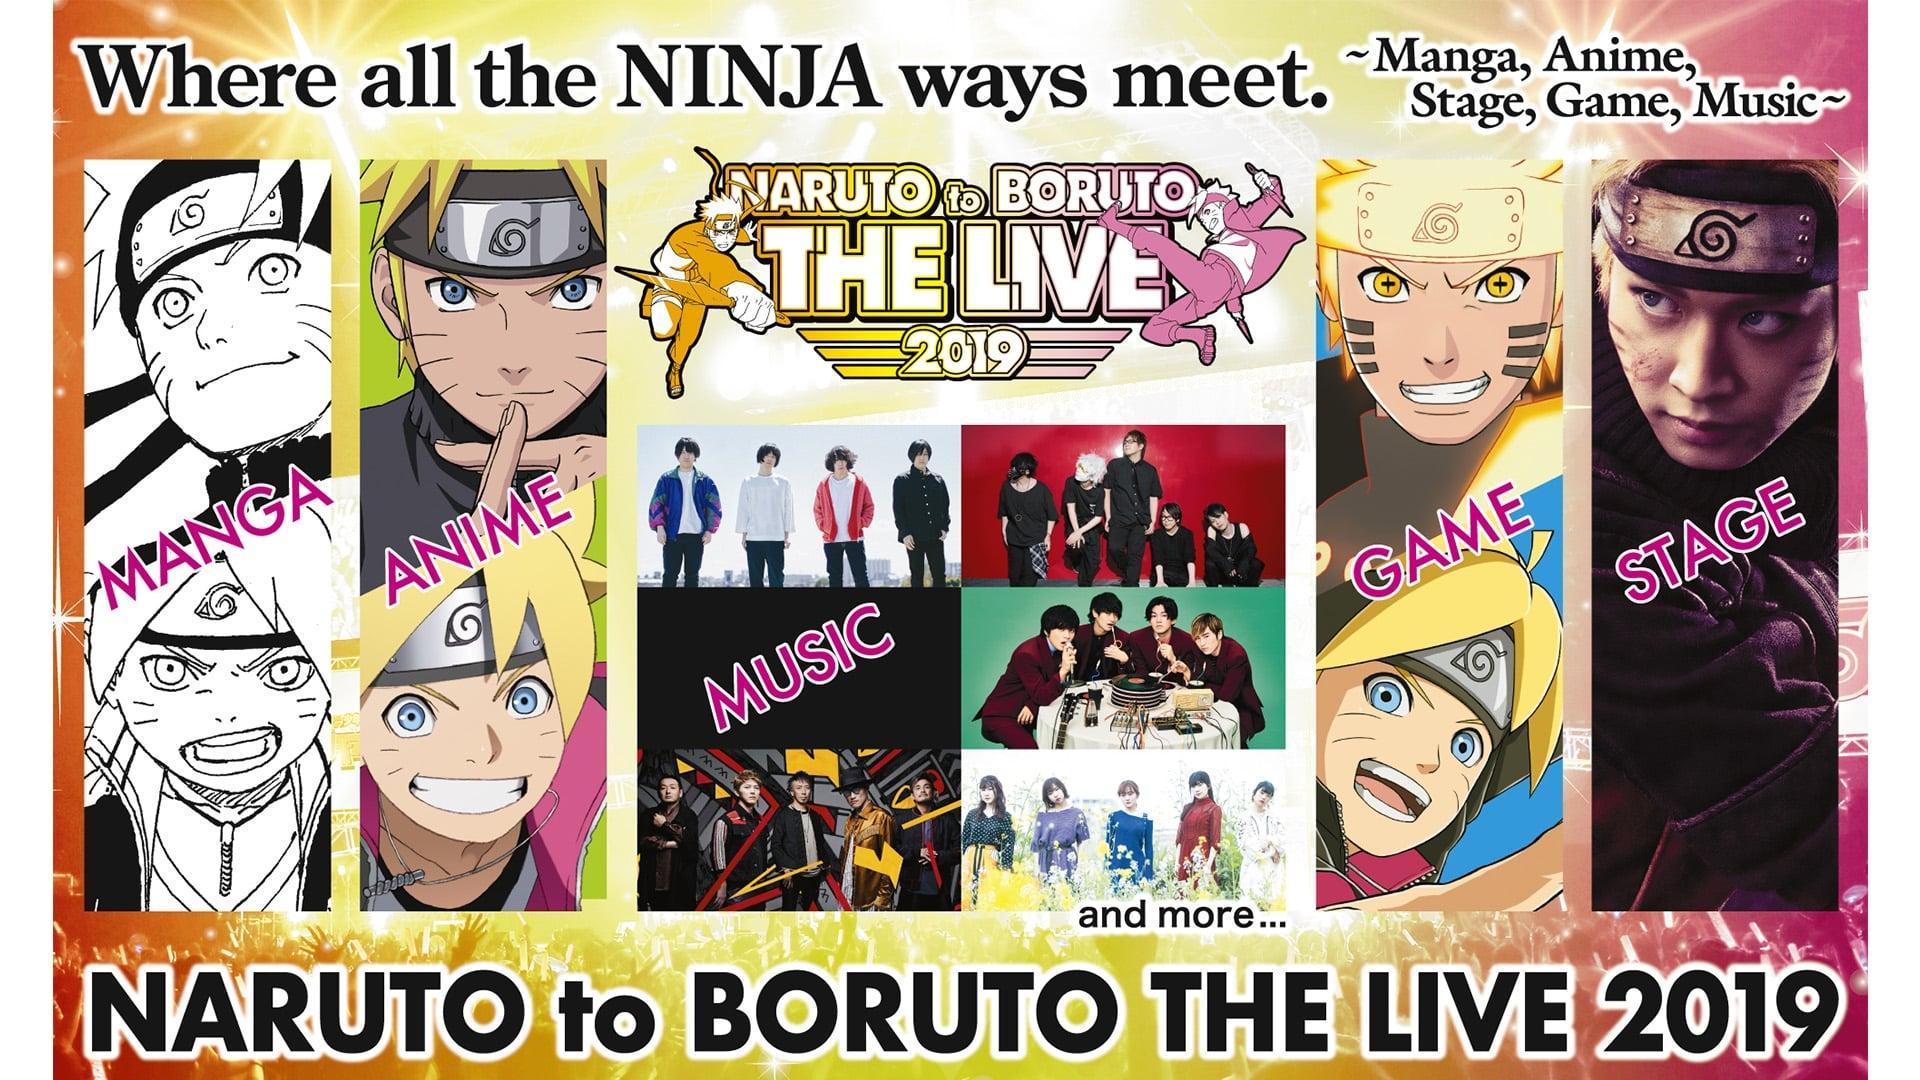 Naruto to Boruto: The Live 2019 backdrop